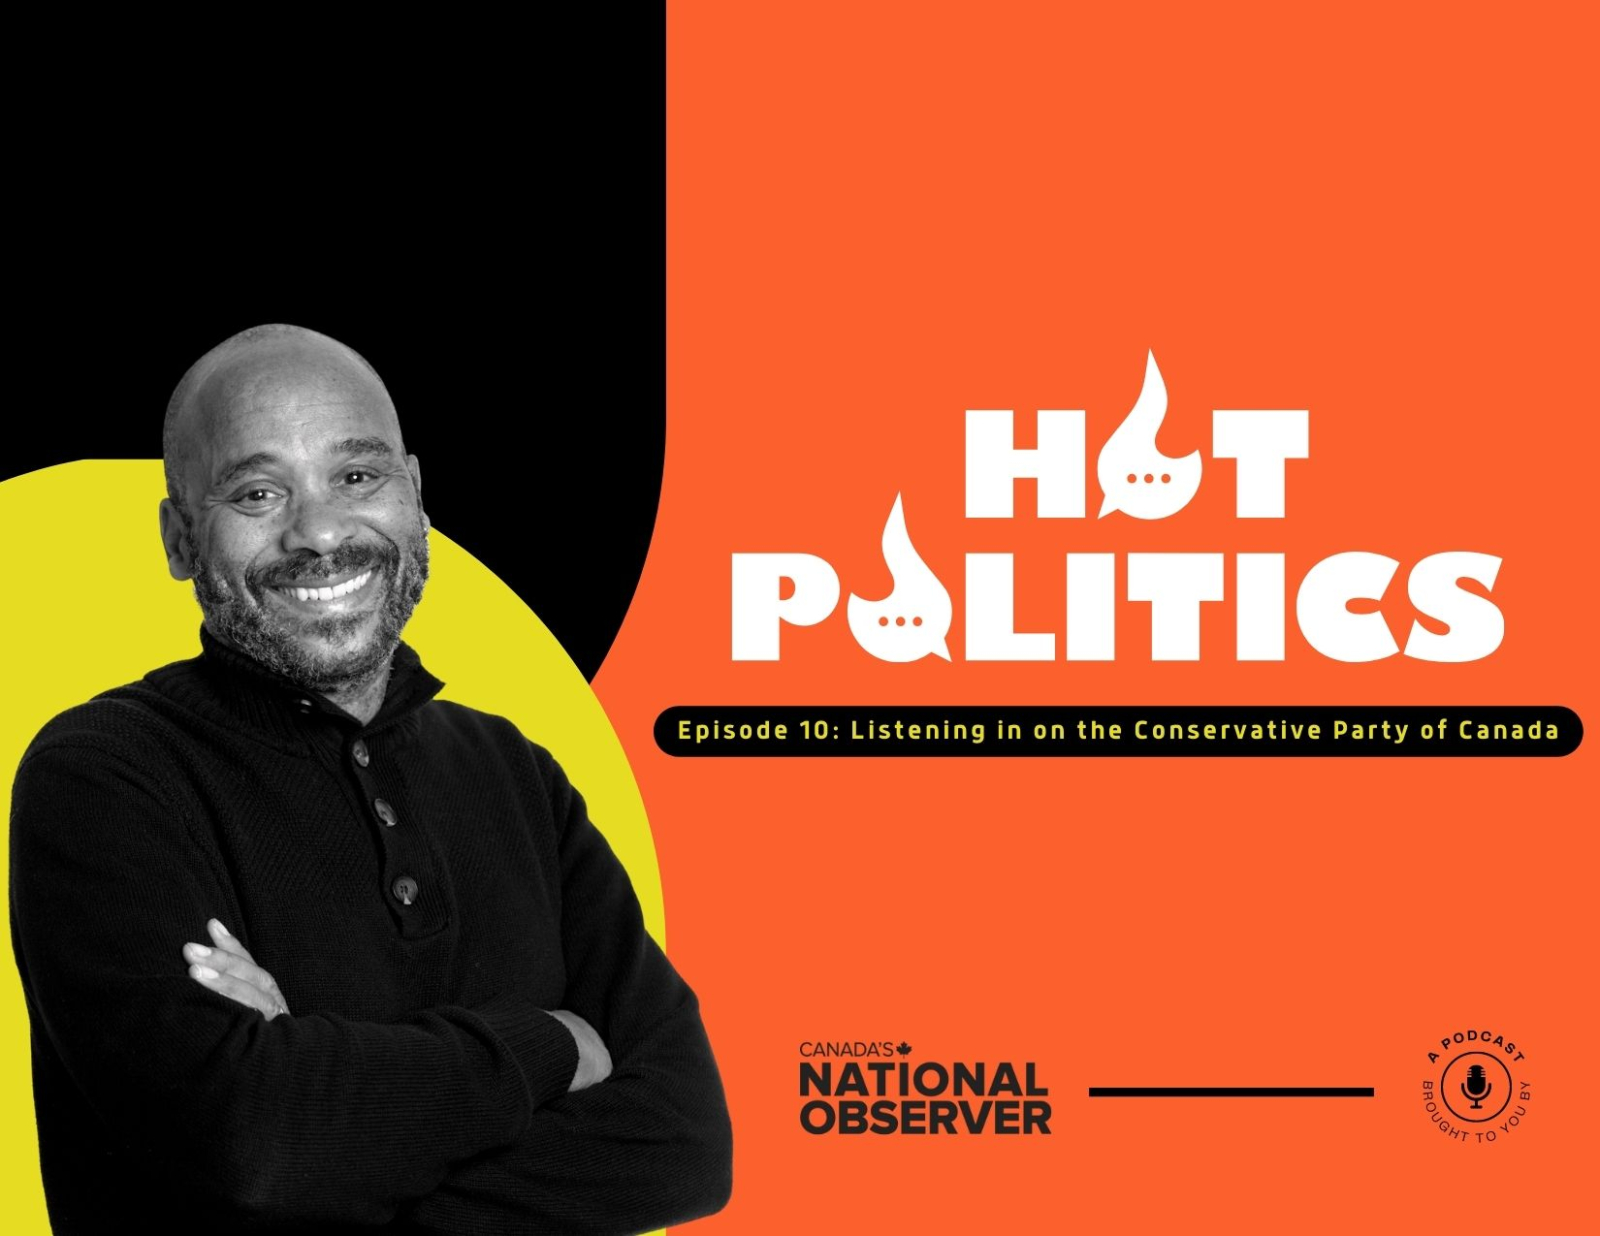 Hot Politics - Episode 10 - Conservative Party